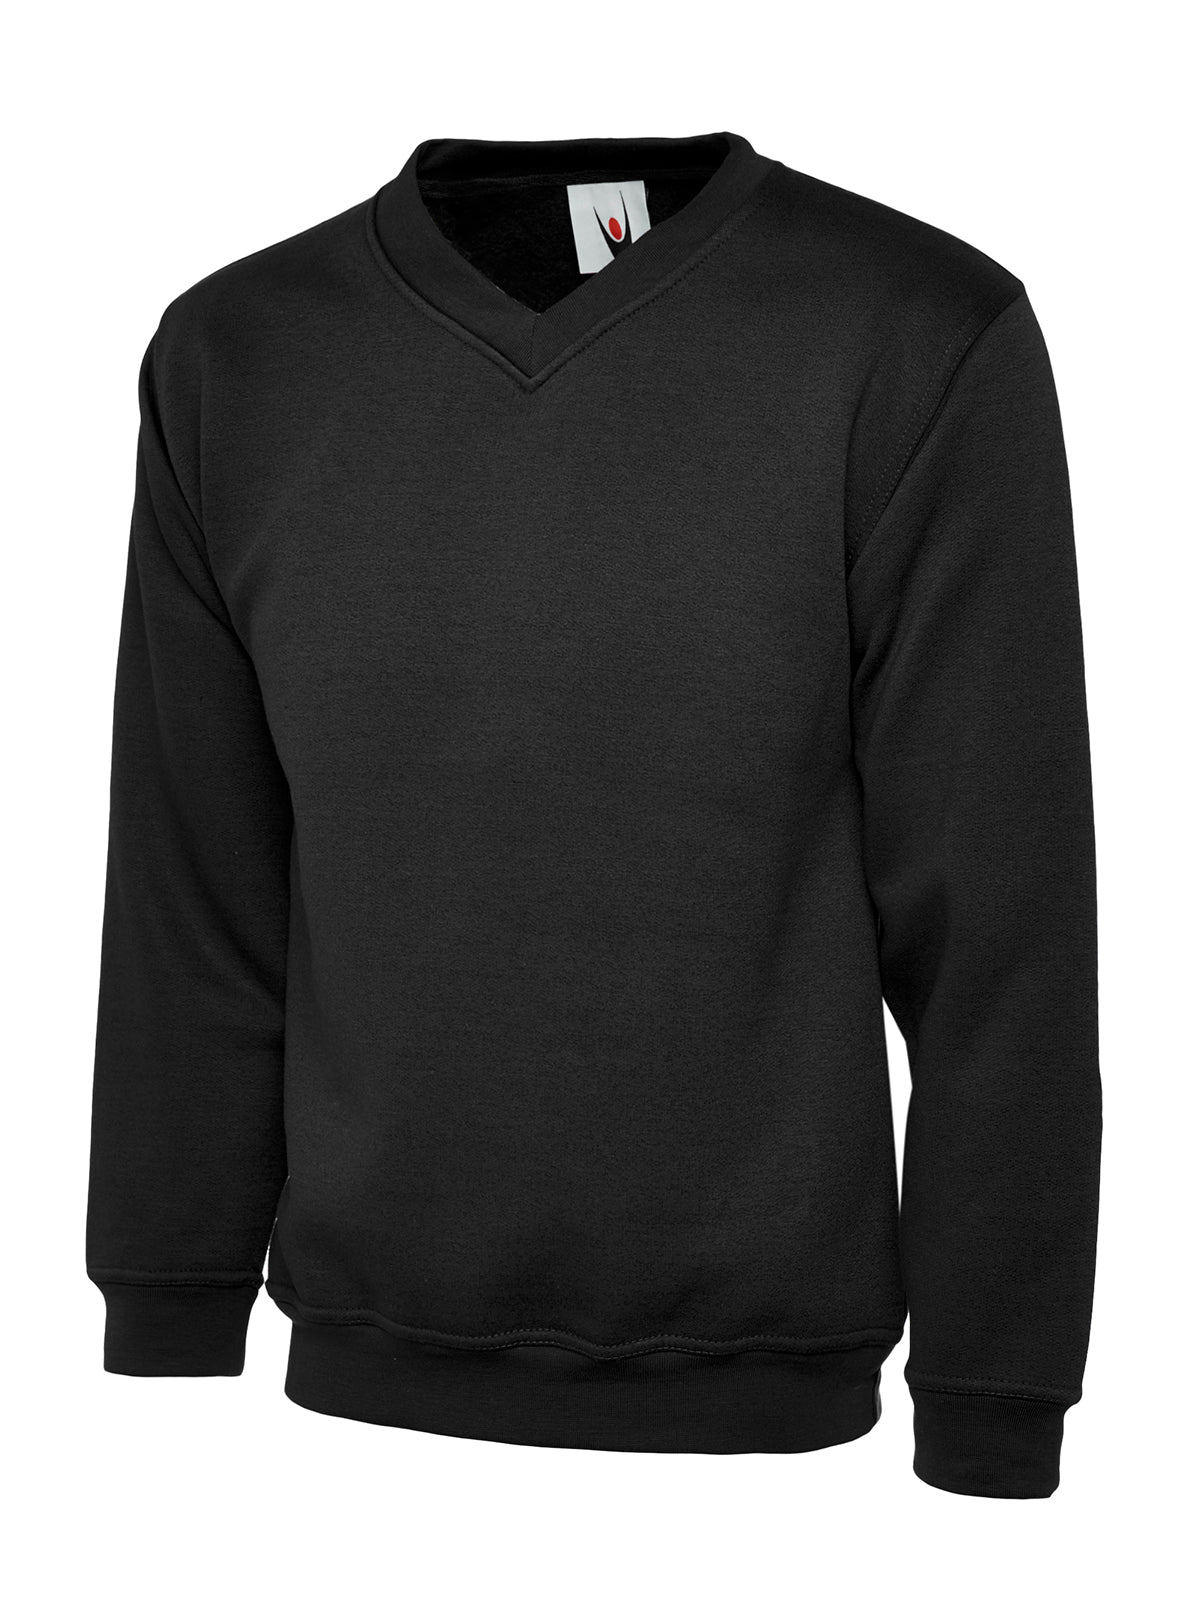 Uneek Premium V-Neck Sweatshirt UC204 - Black